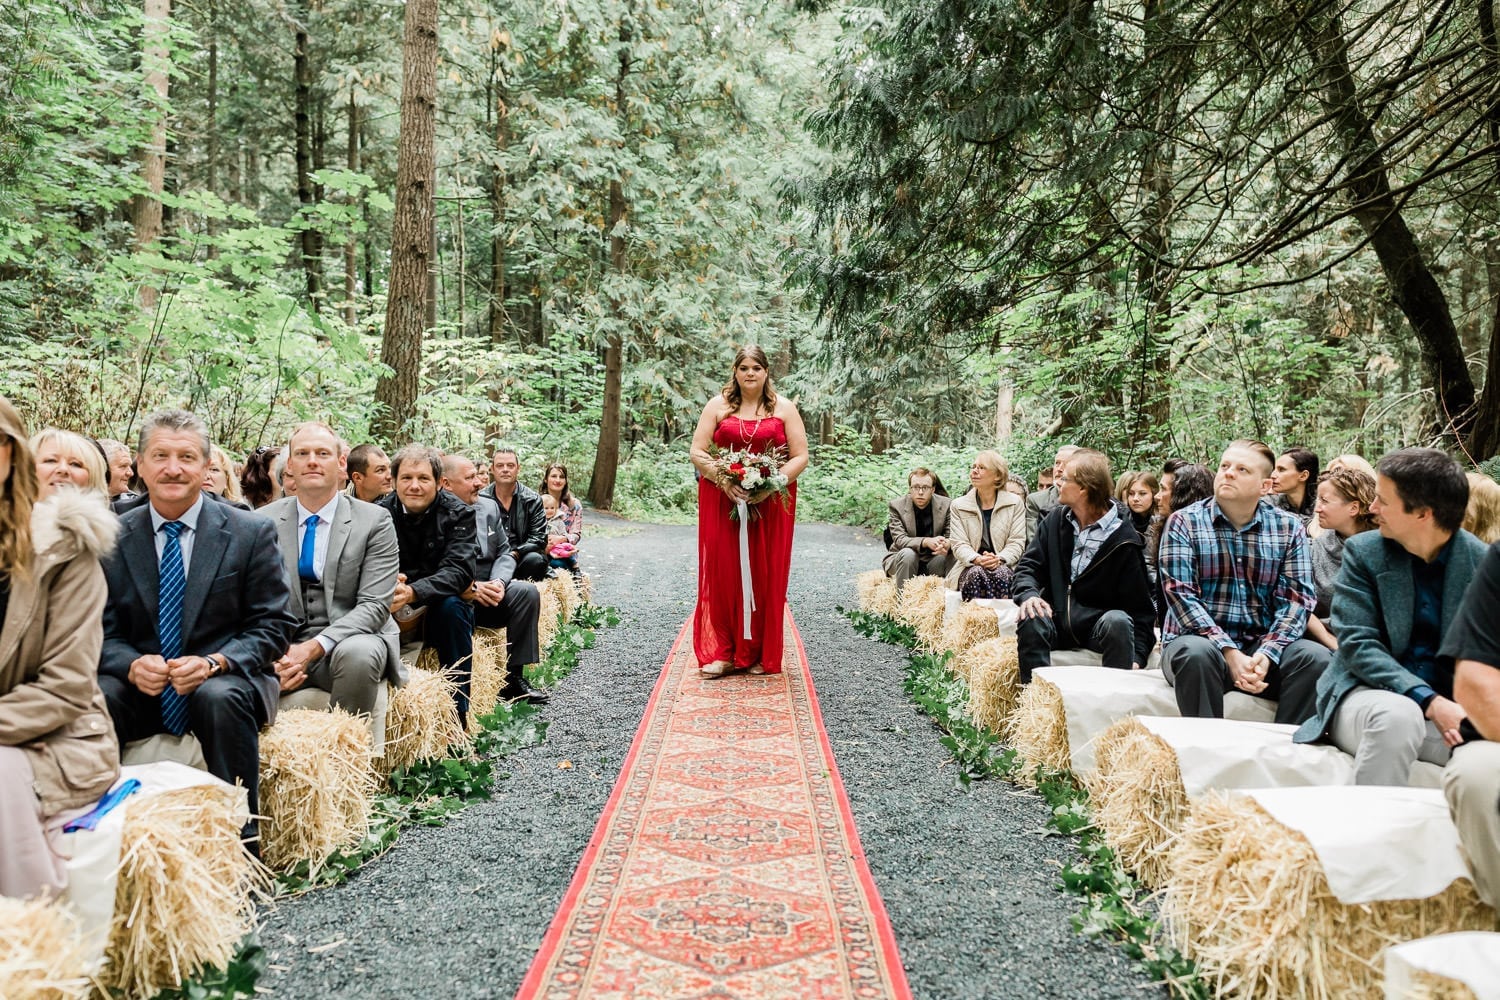 Rustic wedding ceremony photo in Langley | Vancouver wedding photographer